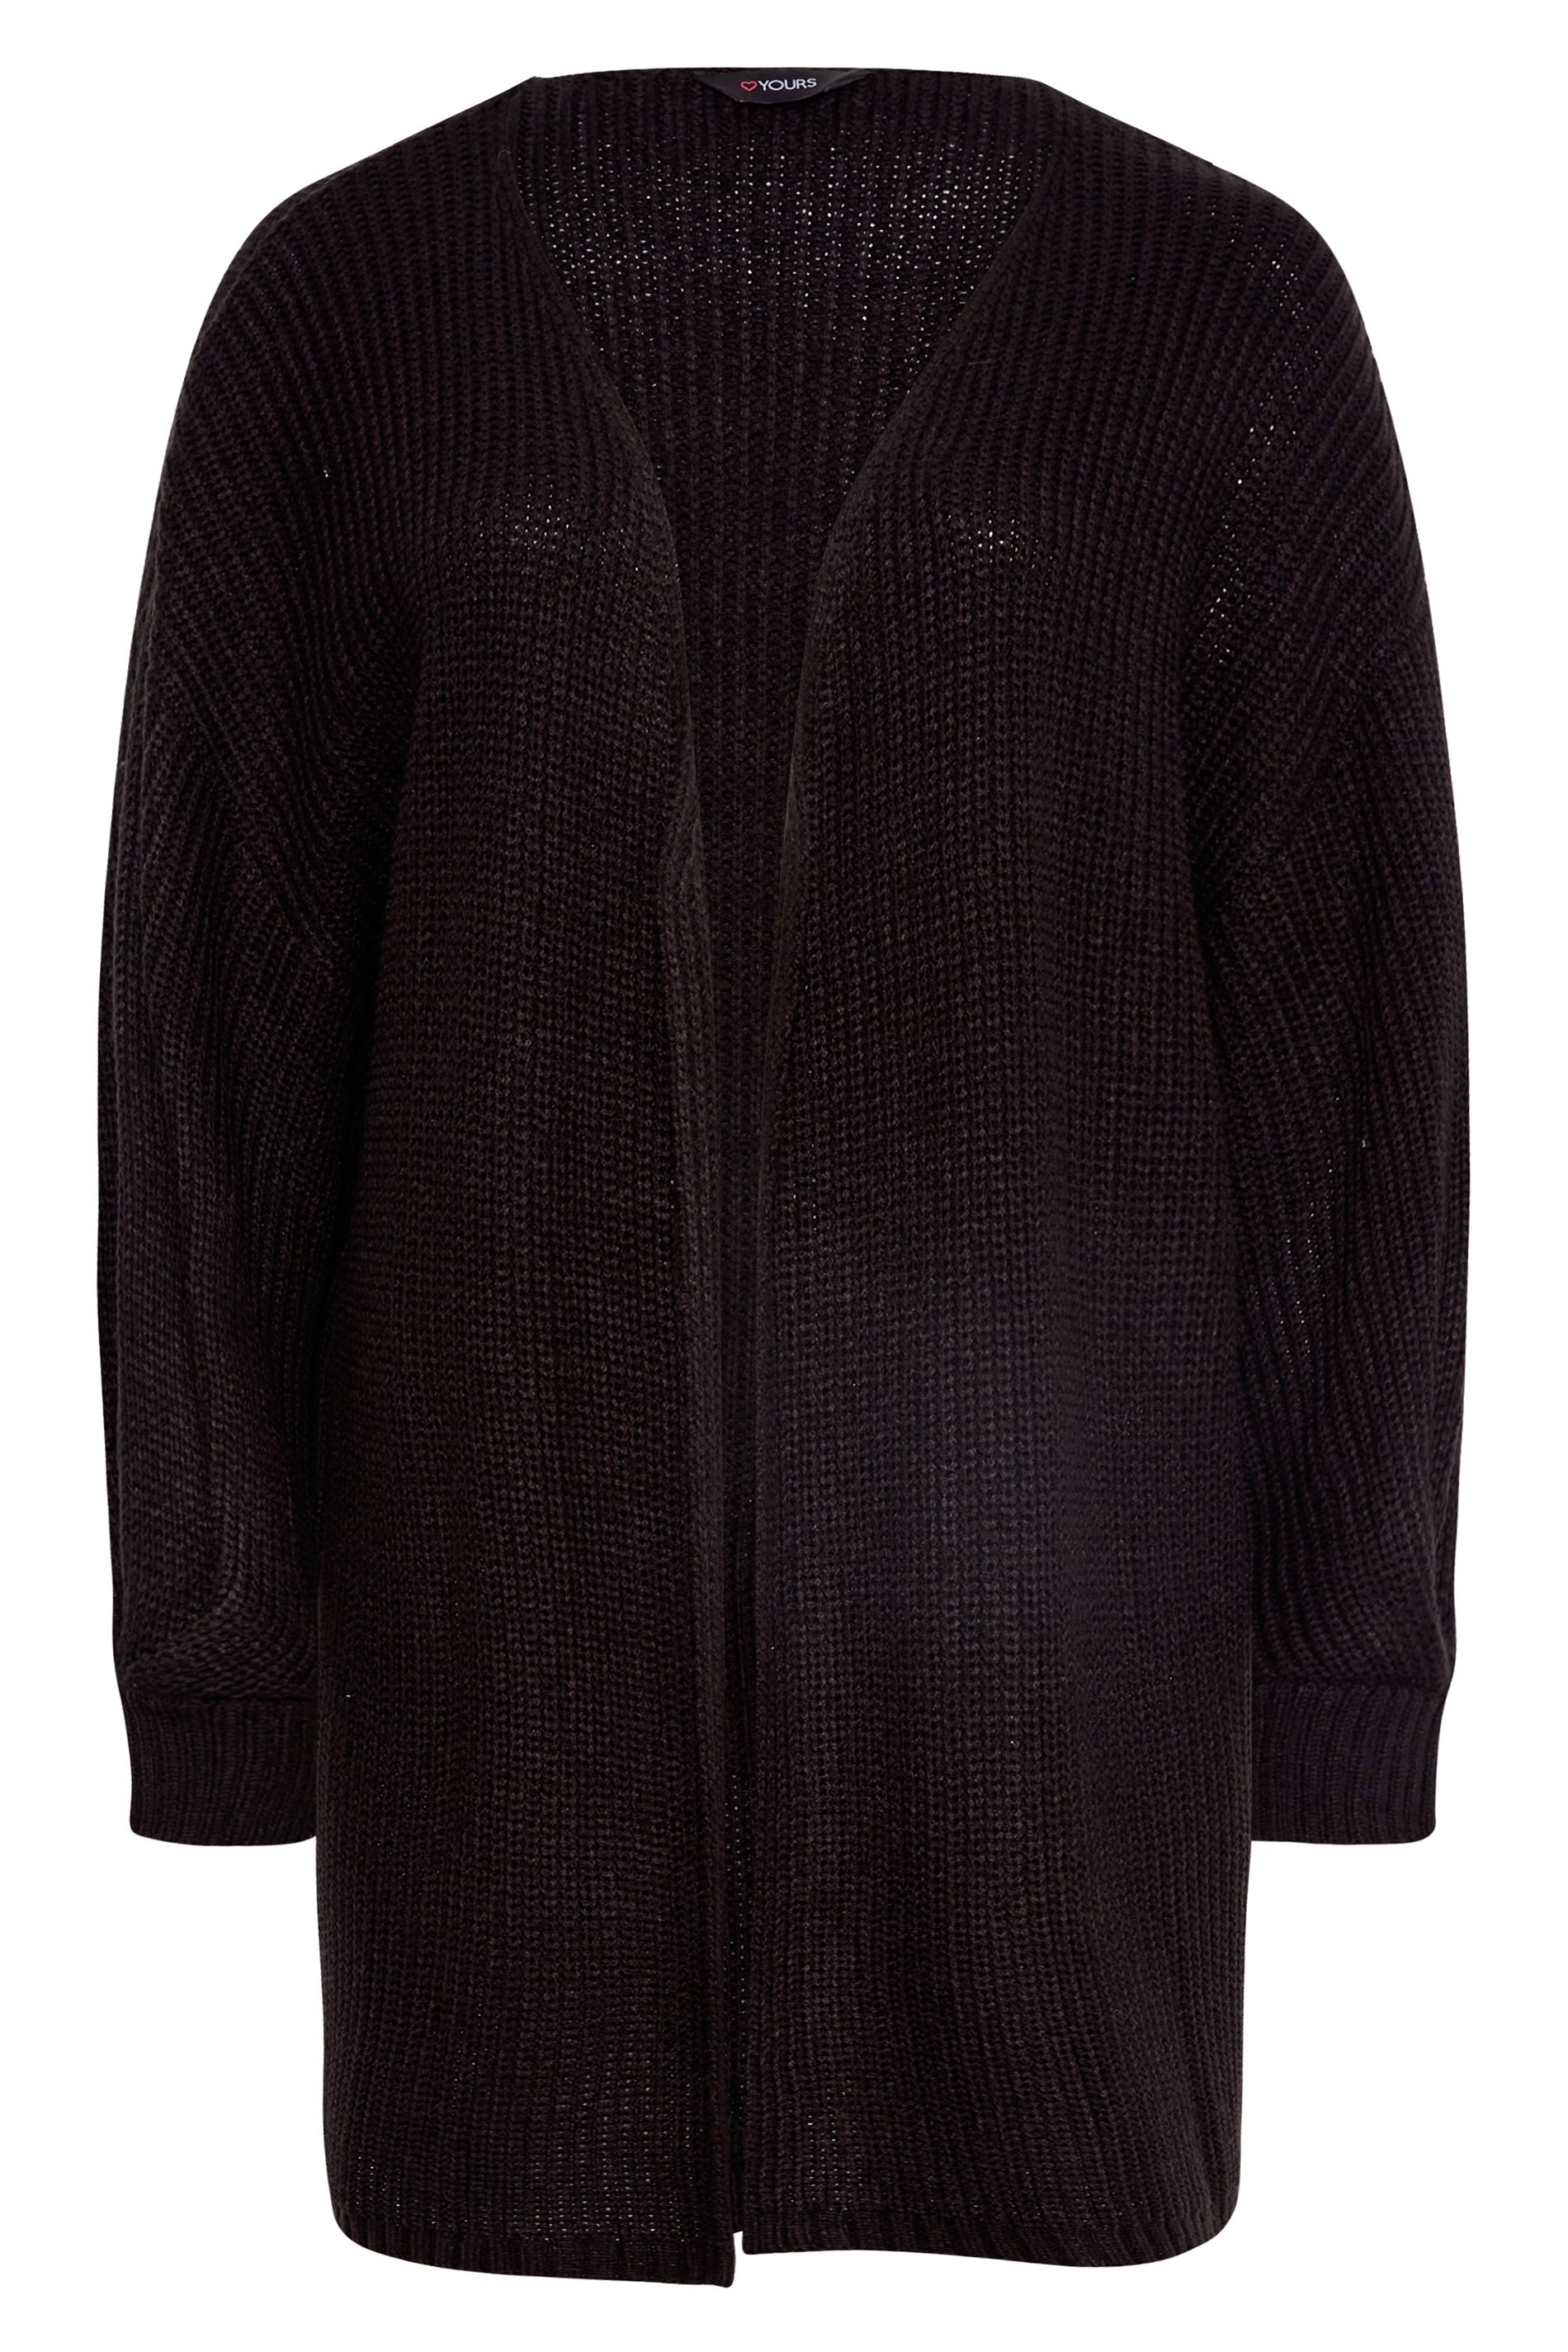 Curve Black Pleat Sleeve Knitted Cardigan_X.jpg